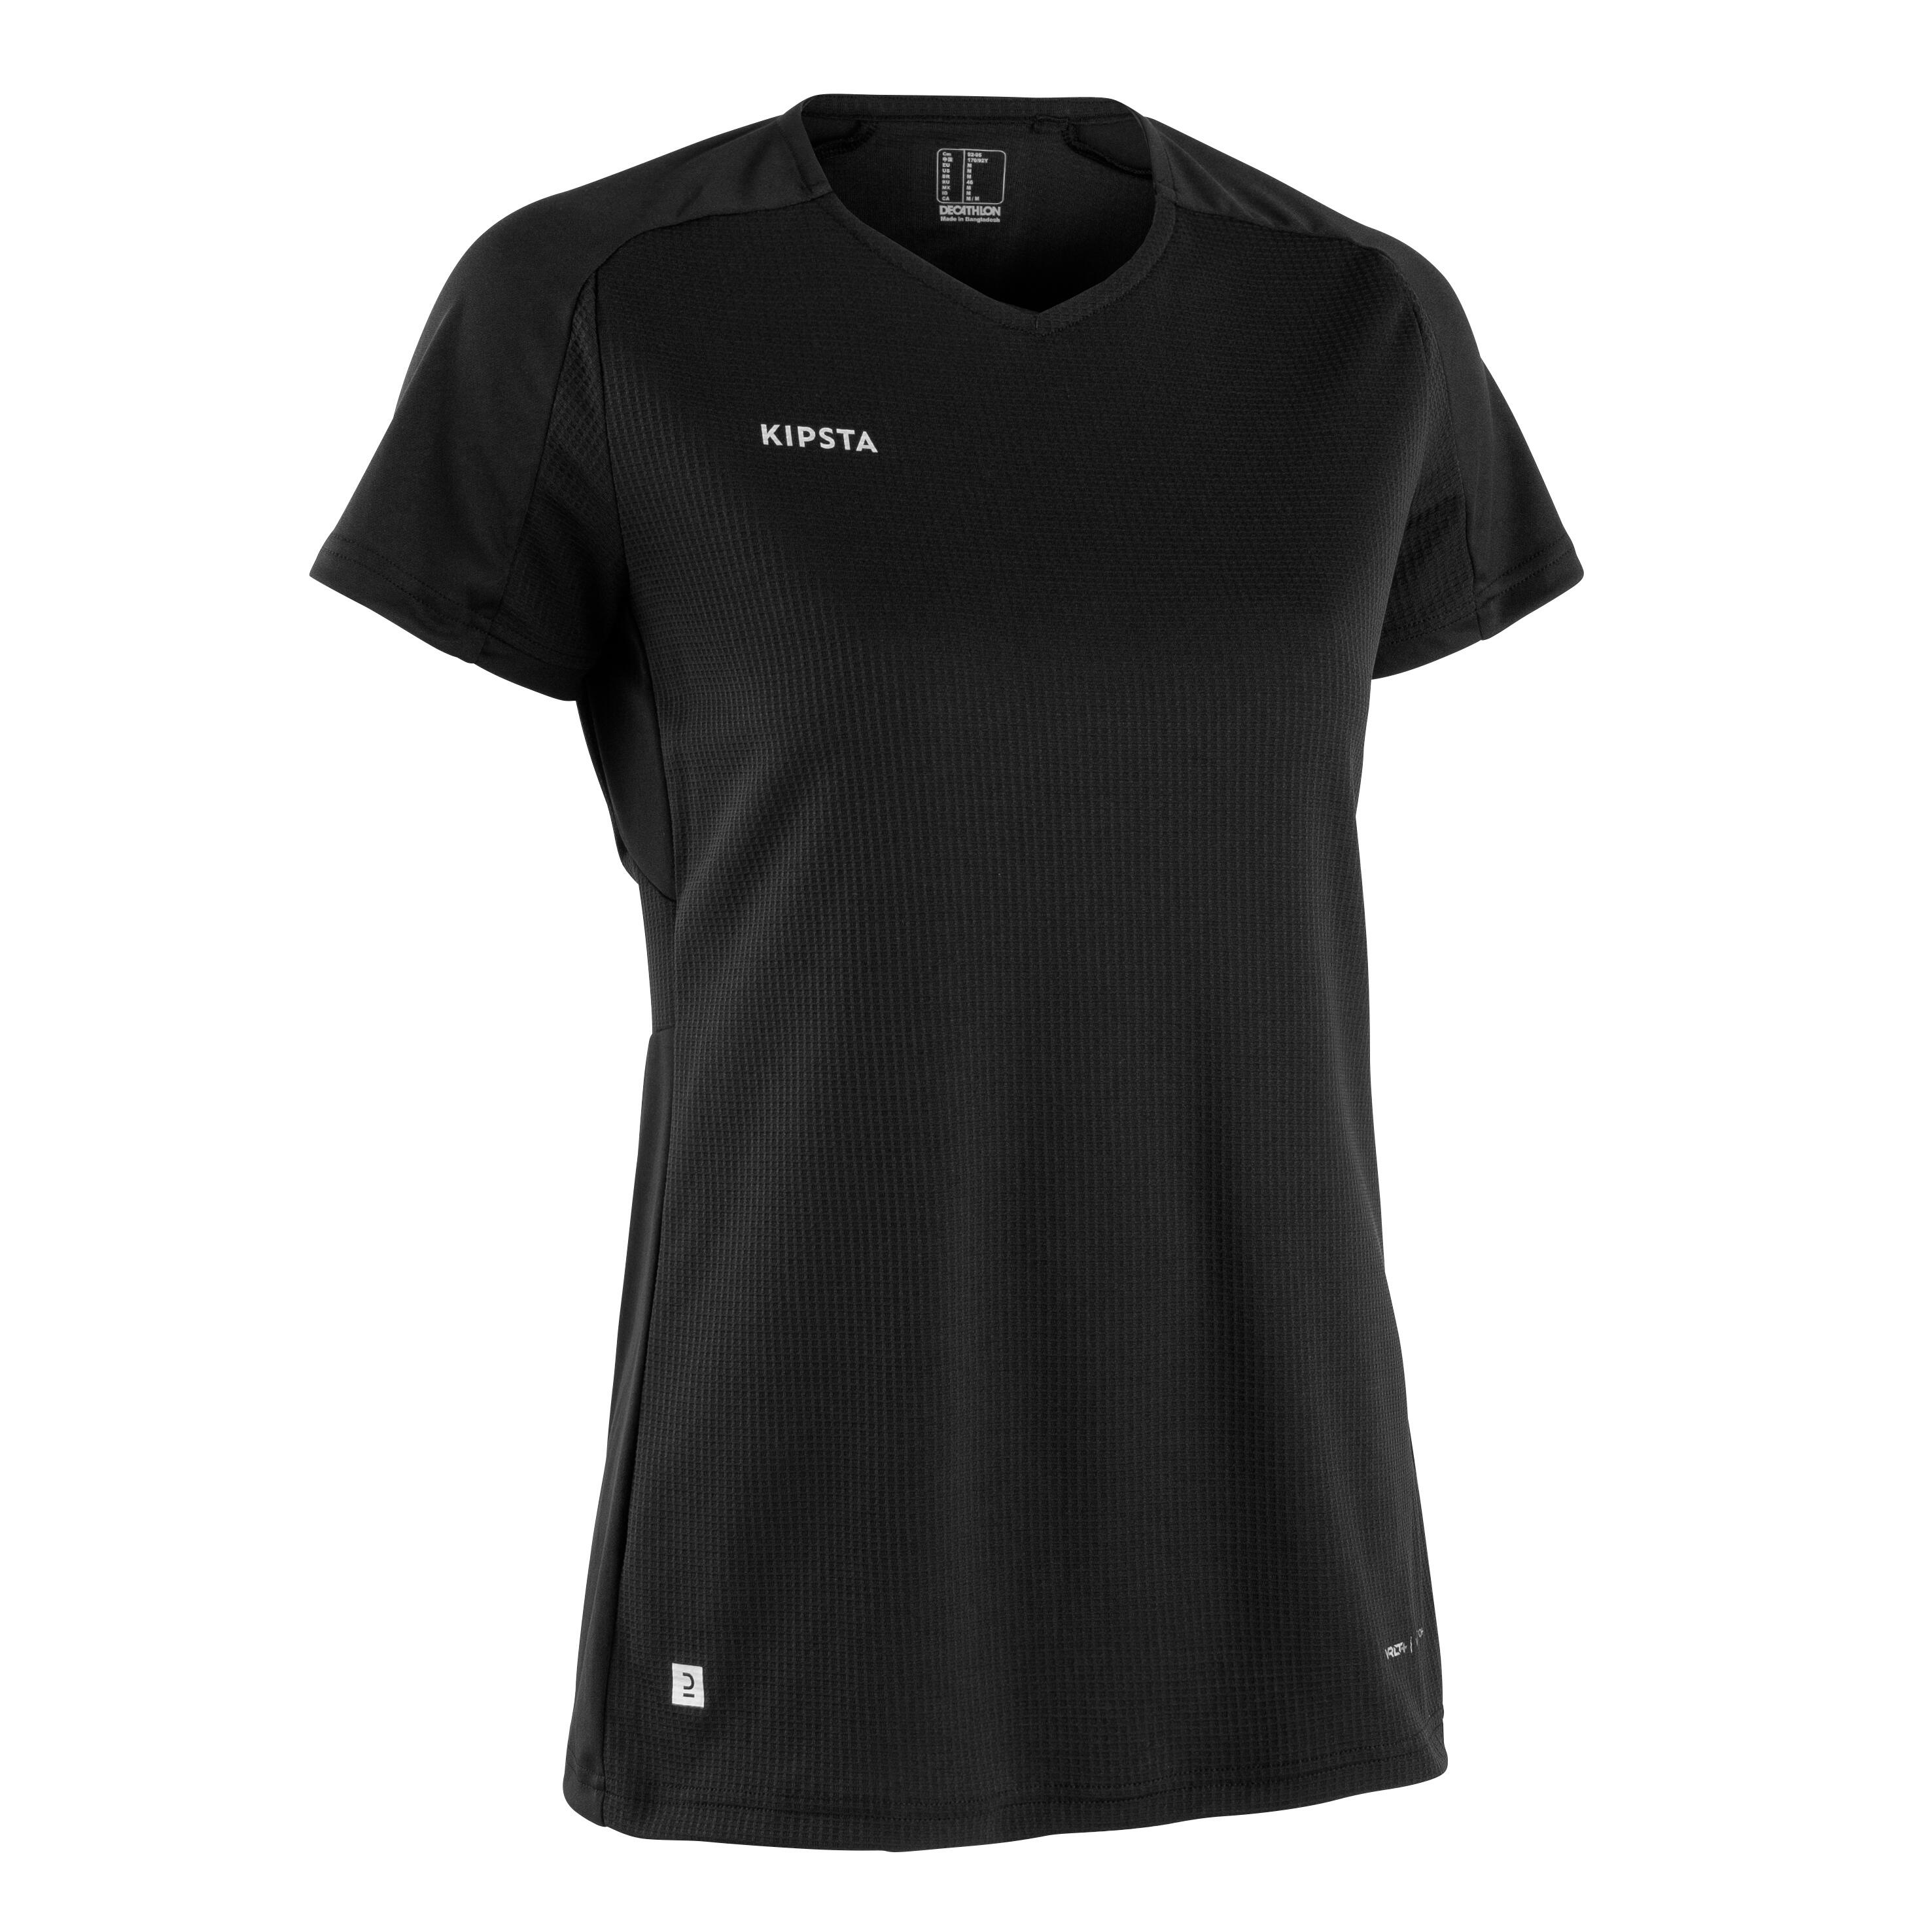 Women's Plain Football Shirt - Black 1/29